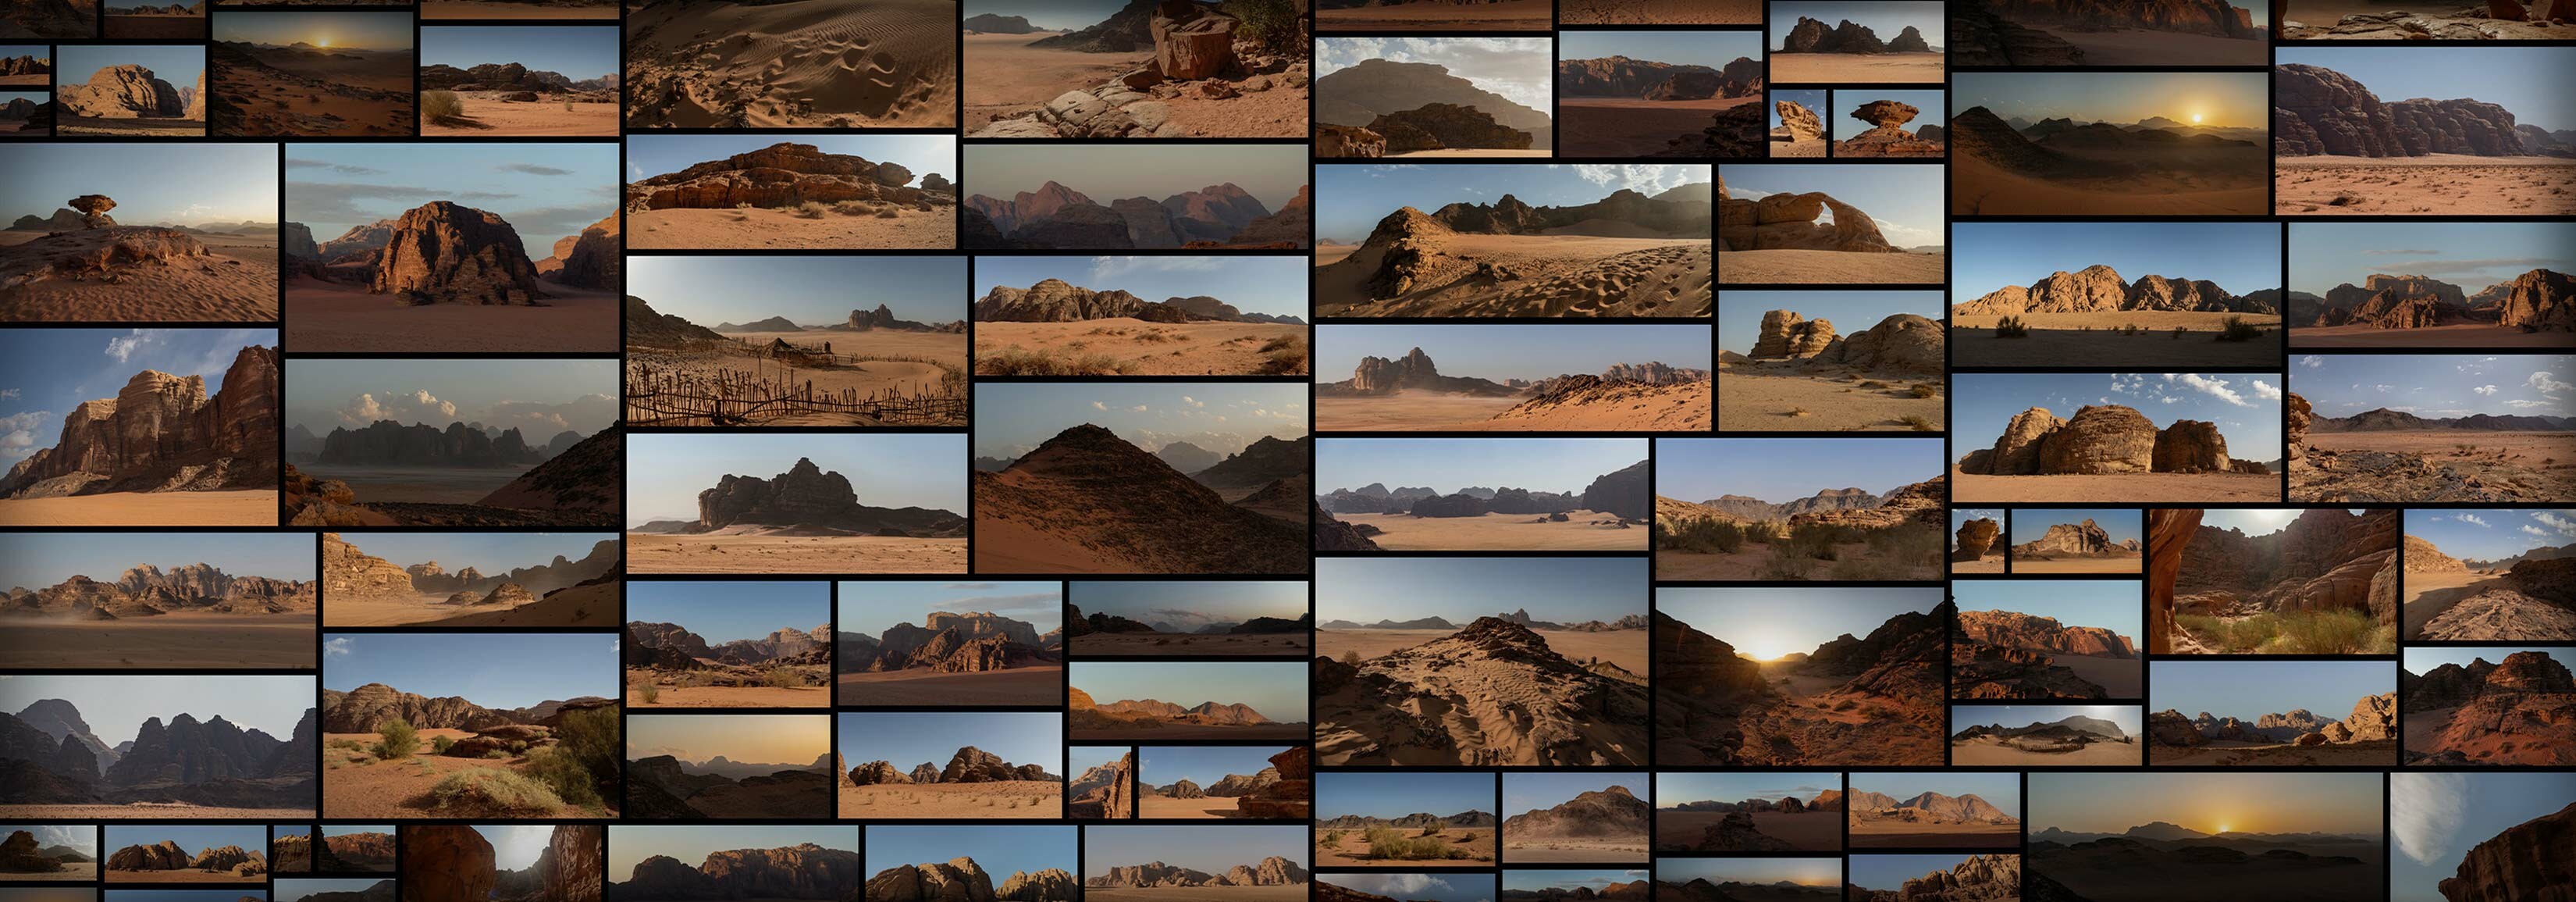 Wadi_Rum_Desert_QuickLook.jpeg